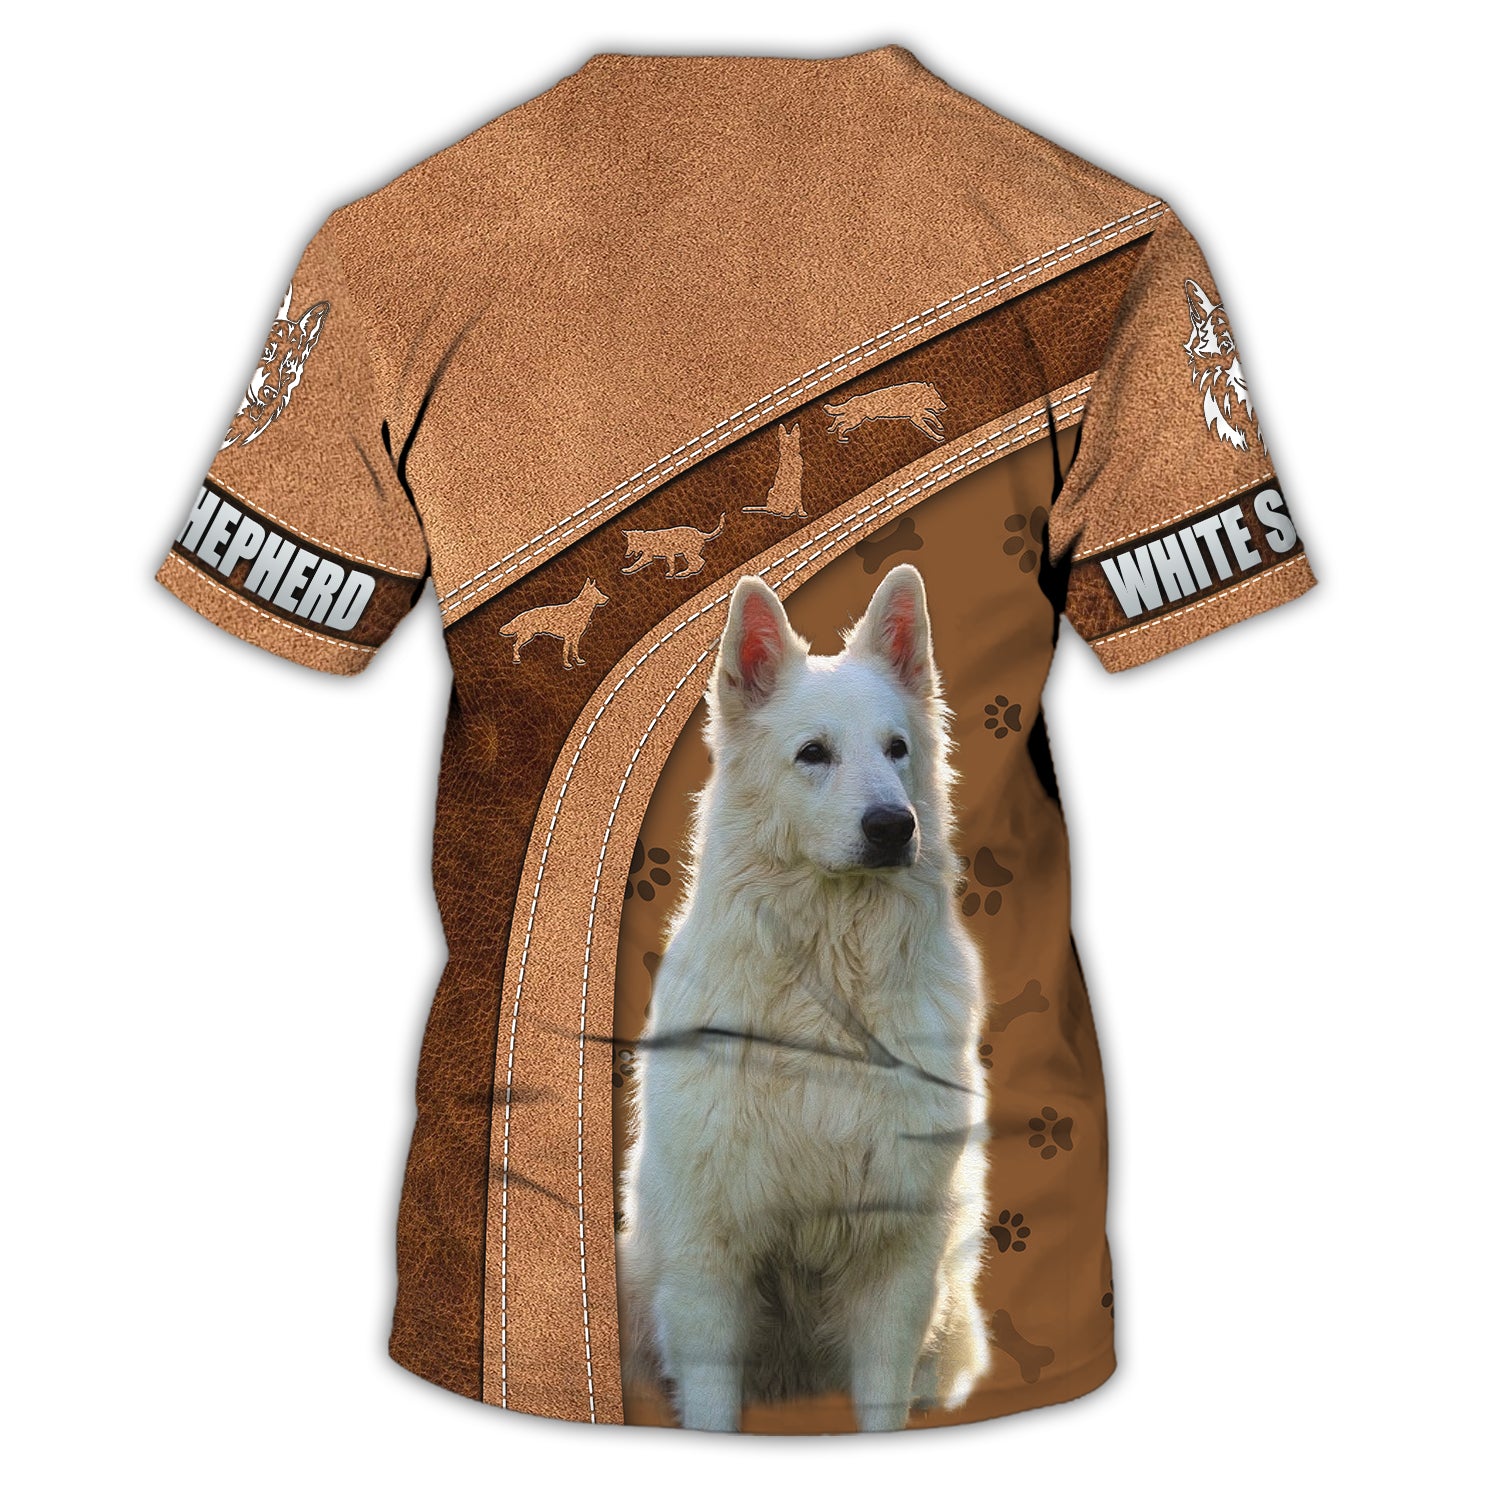 White Shepherd - Personalized Name 3D Tshirt - Tad 176